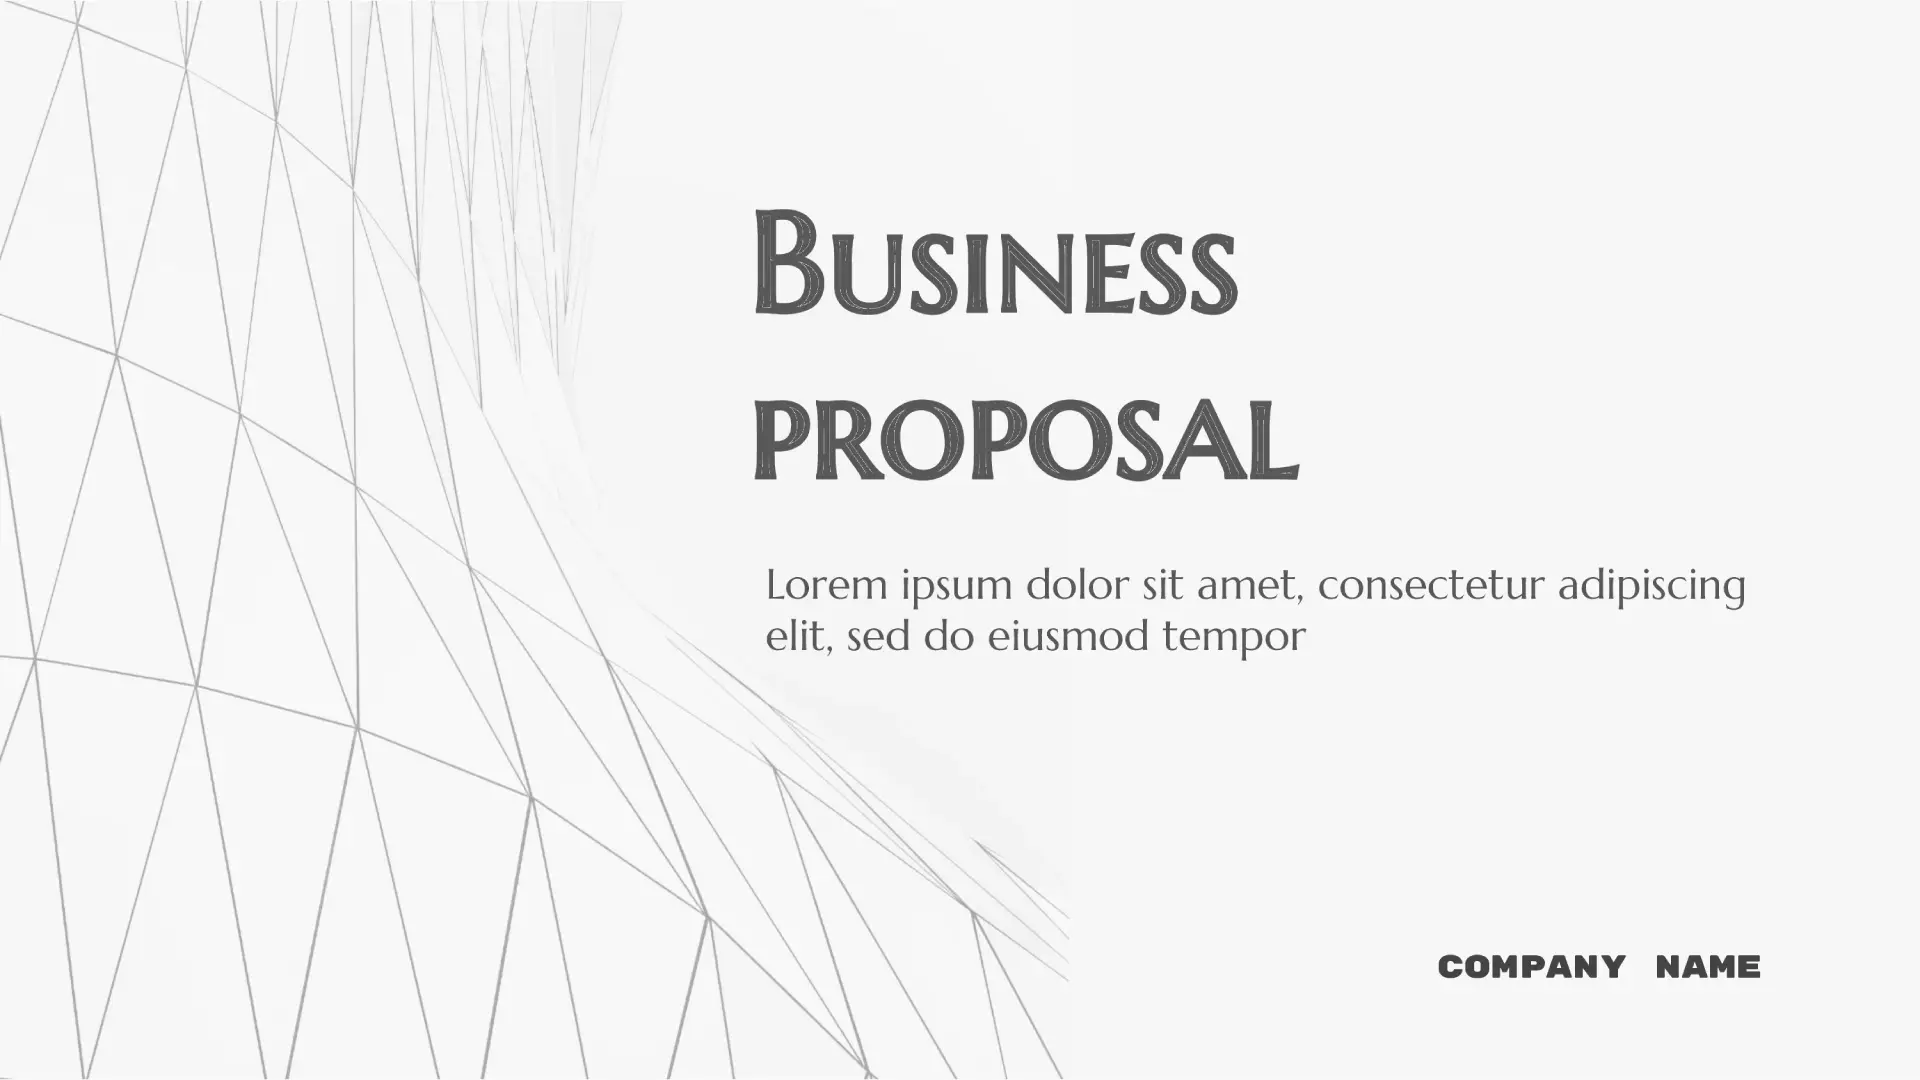 Business Proposal Template for Google Slides